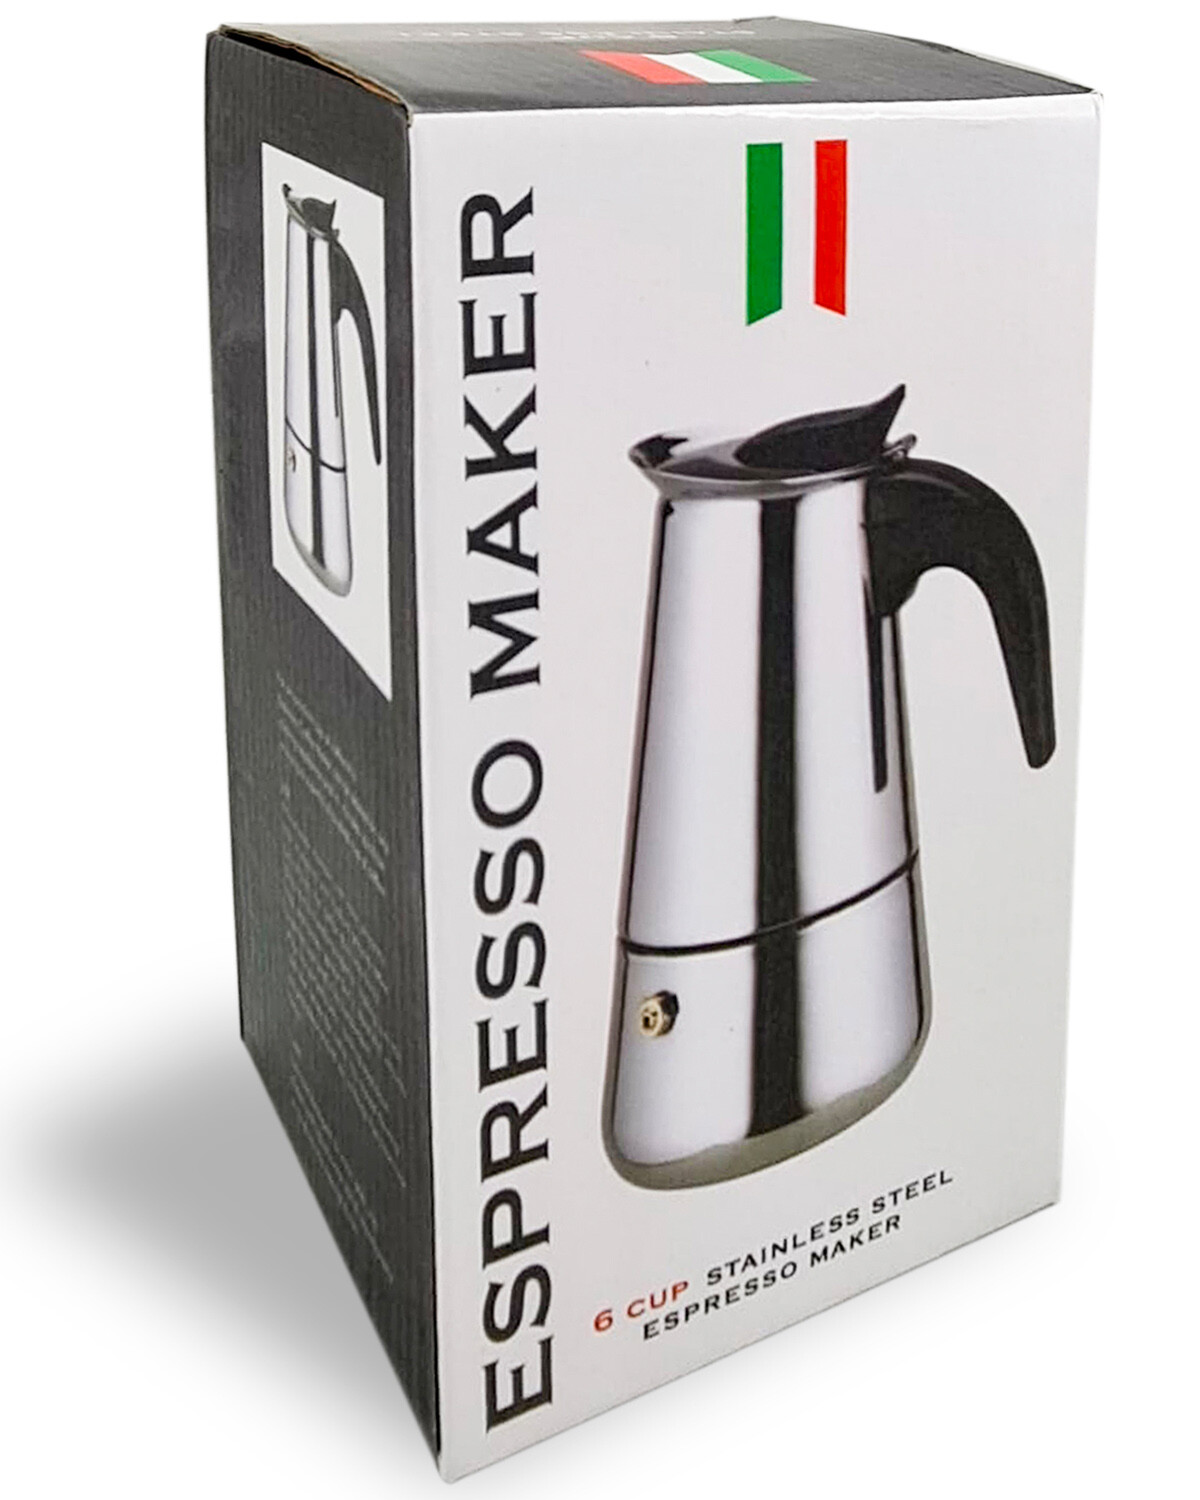 Cafetera italiana 6 tazas Evva inducción - Ibili por 21,00 €